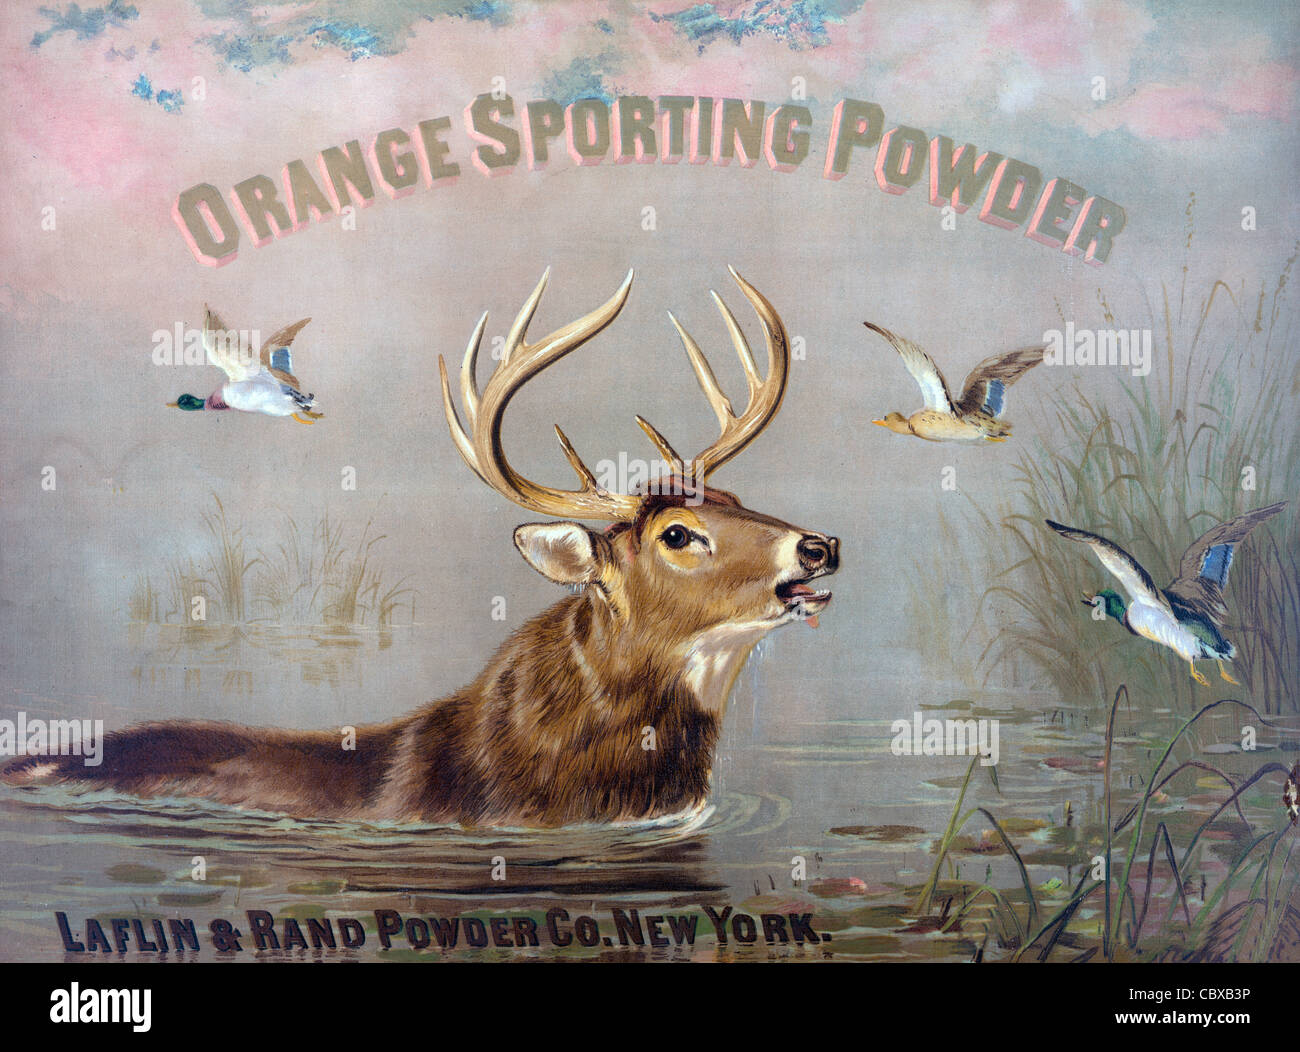 Orange sporting powder. Laflin & Rand Powder Company, New York. c1873 Stock Photo